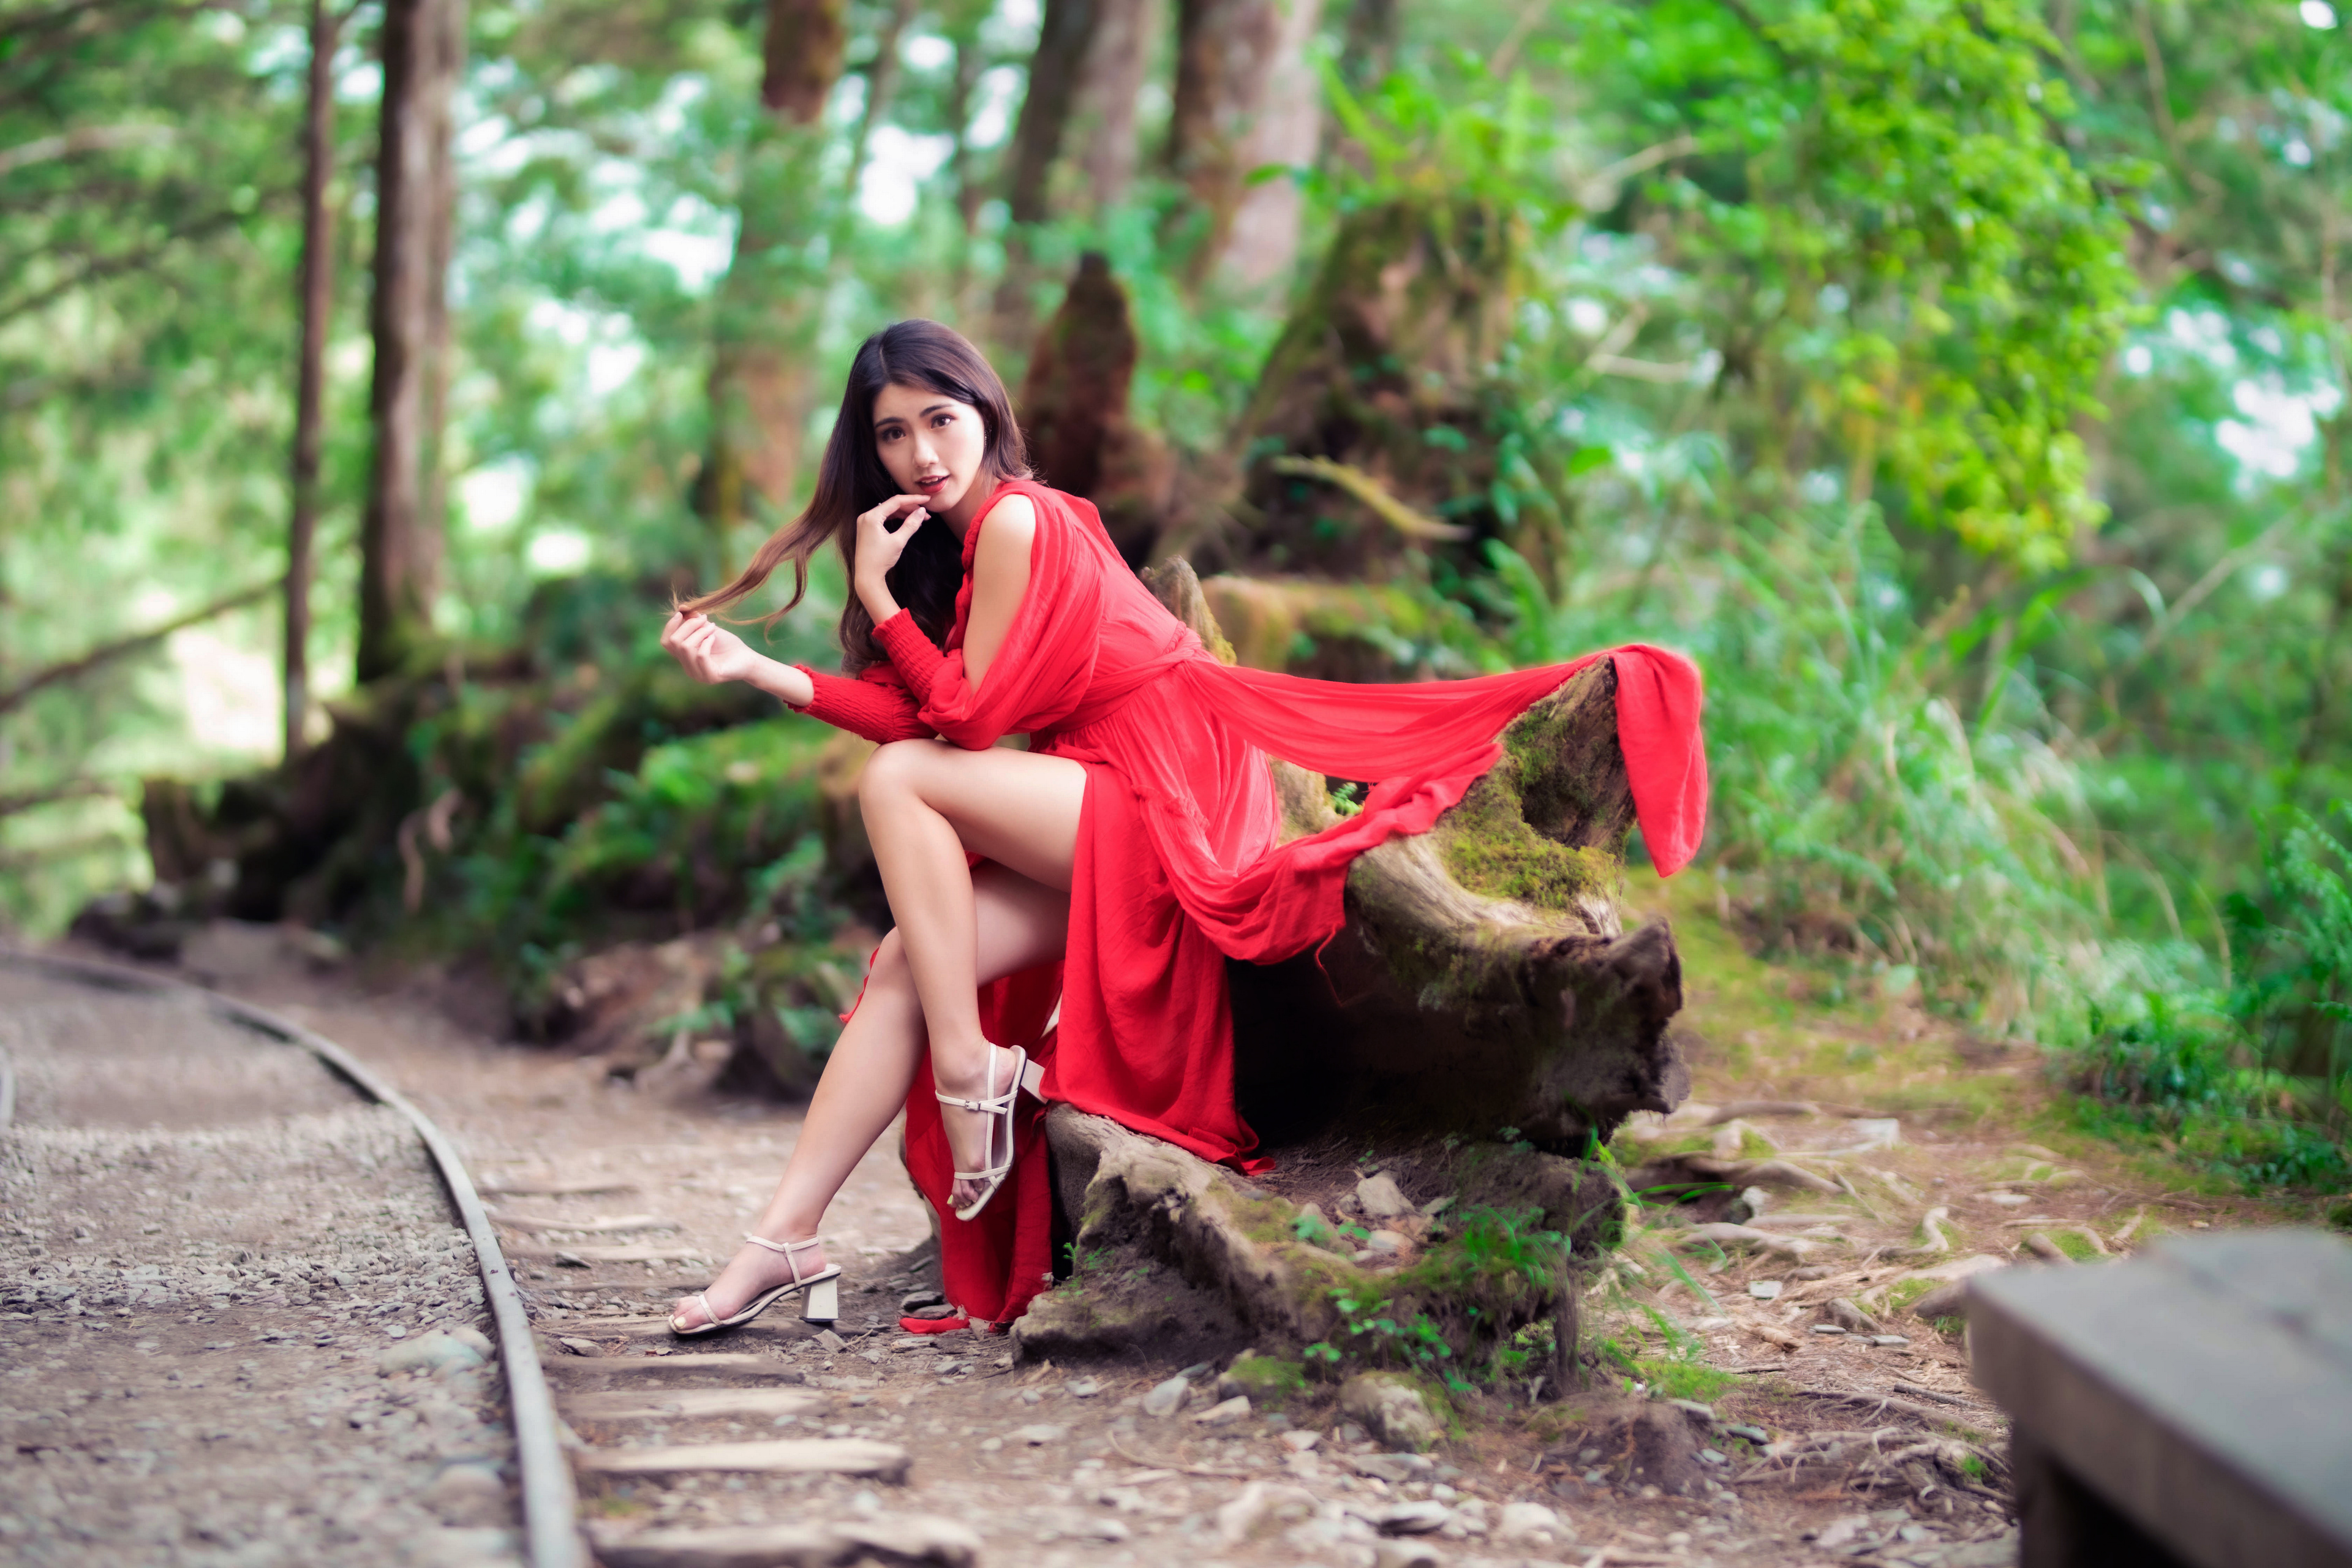 Asian Model Women Long Hair Dark Hair Red Dress Railway Trees Depth Of Field Sitting Barefoot Sandal 3840x2560